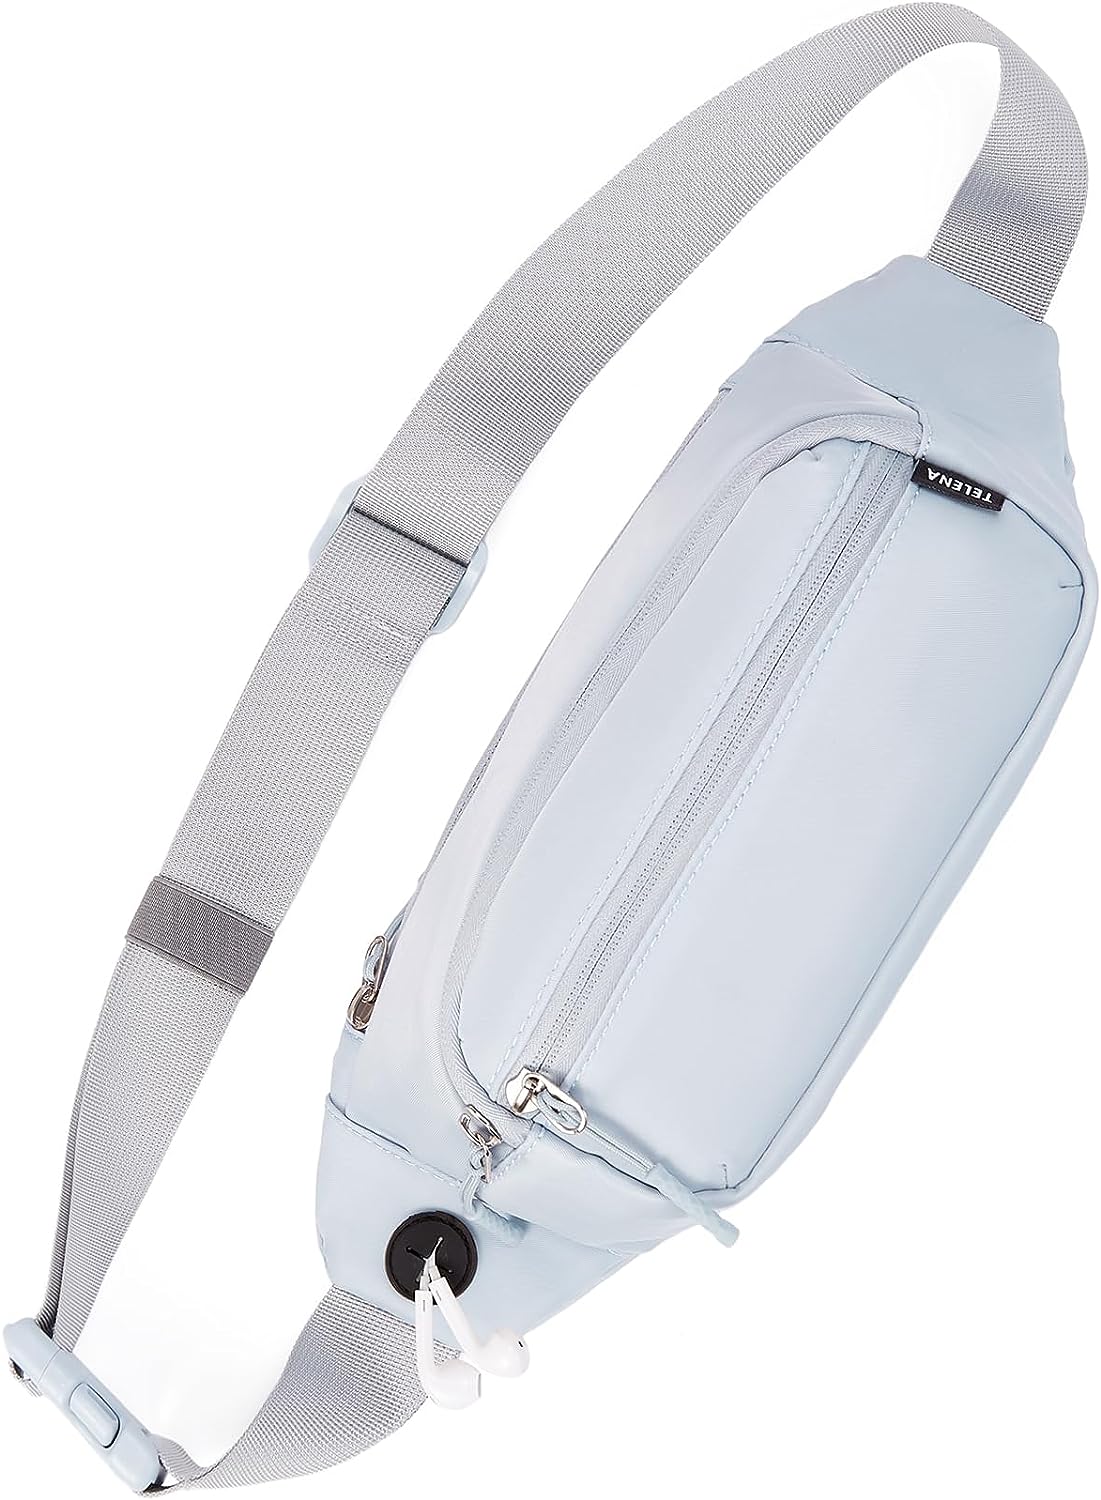  Telena Belt Bag for Women Fanny Pack Cross Body Bag Fashion  Waist Pack with Adjustable Strap Black